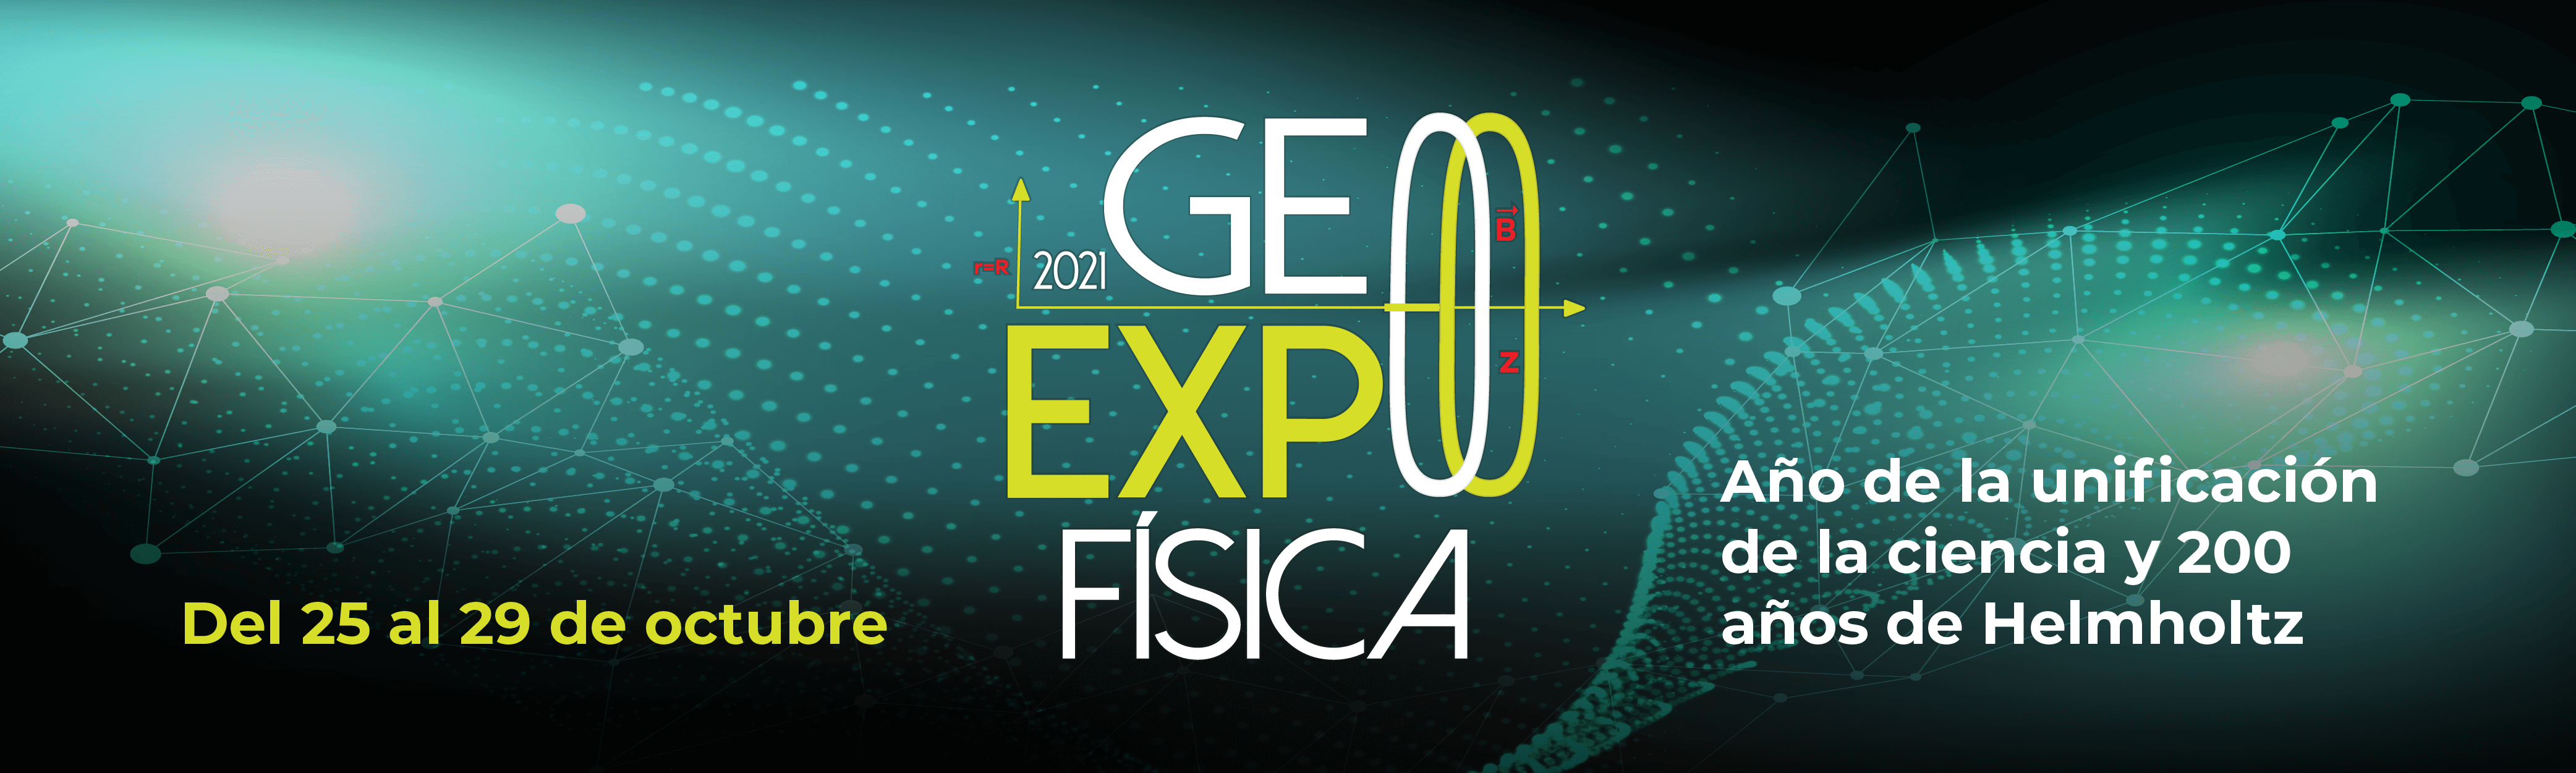 banner Geo Expo-Física 2021